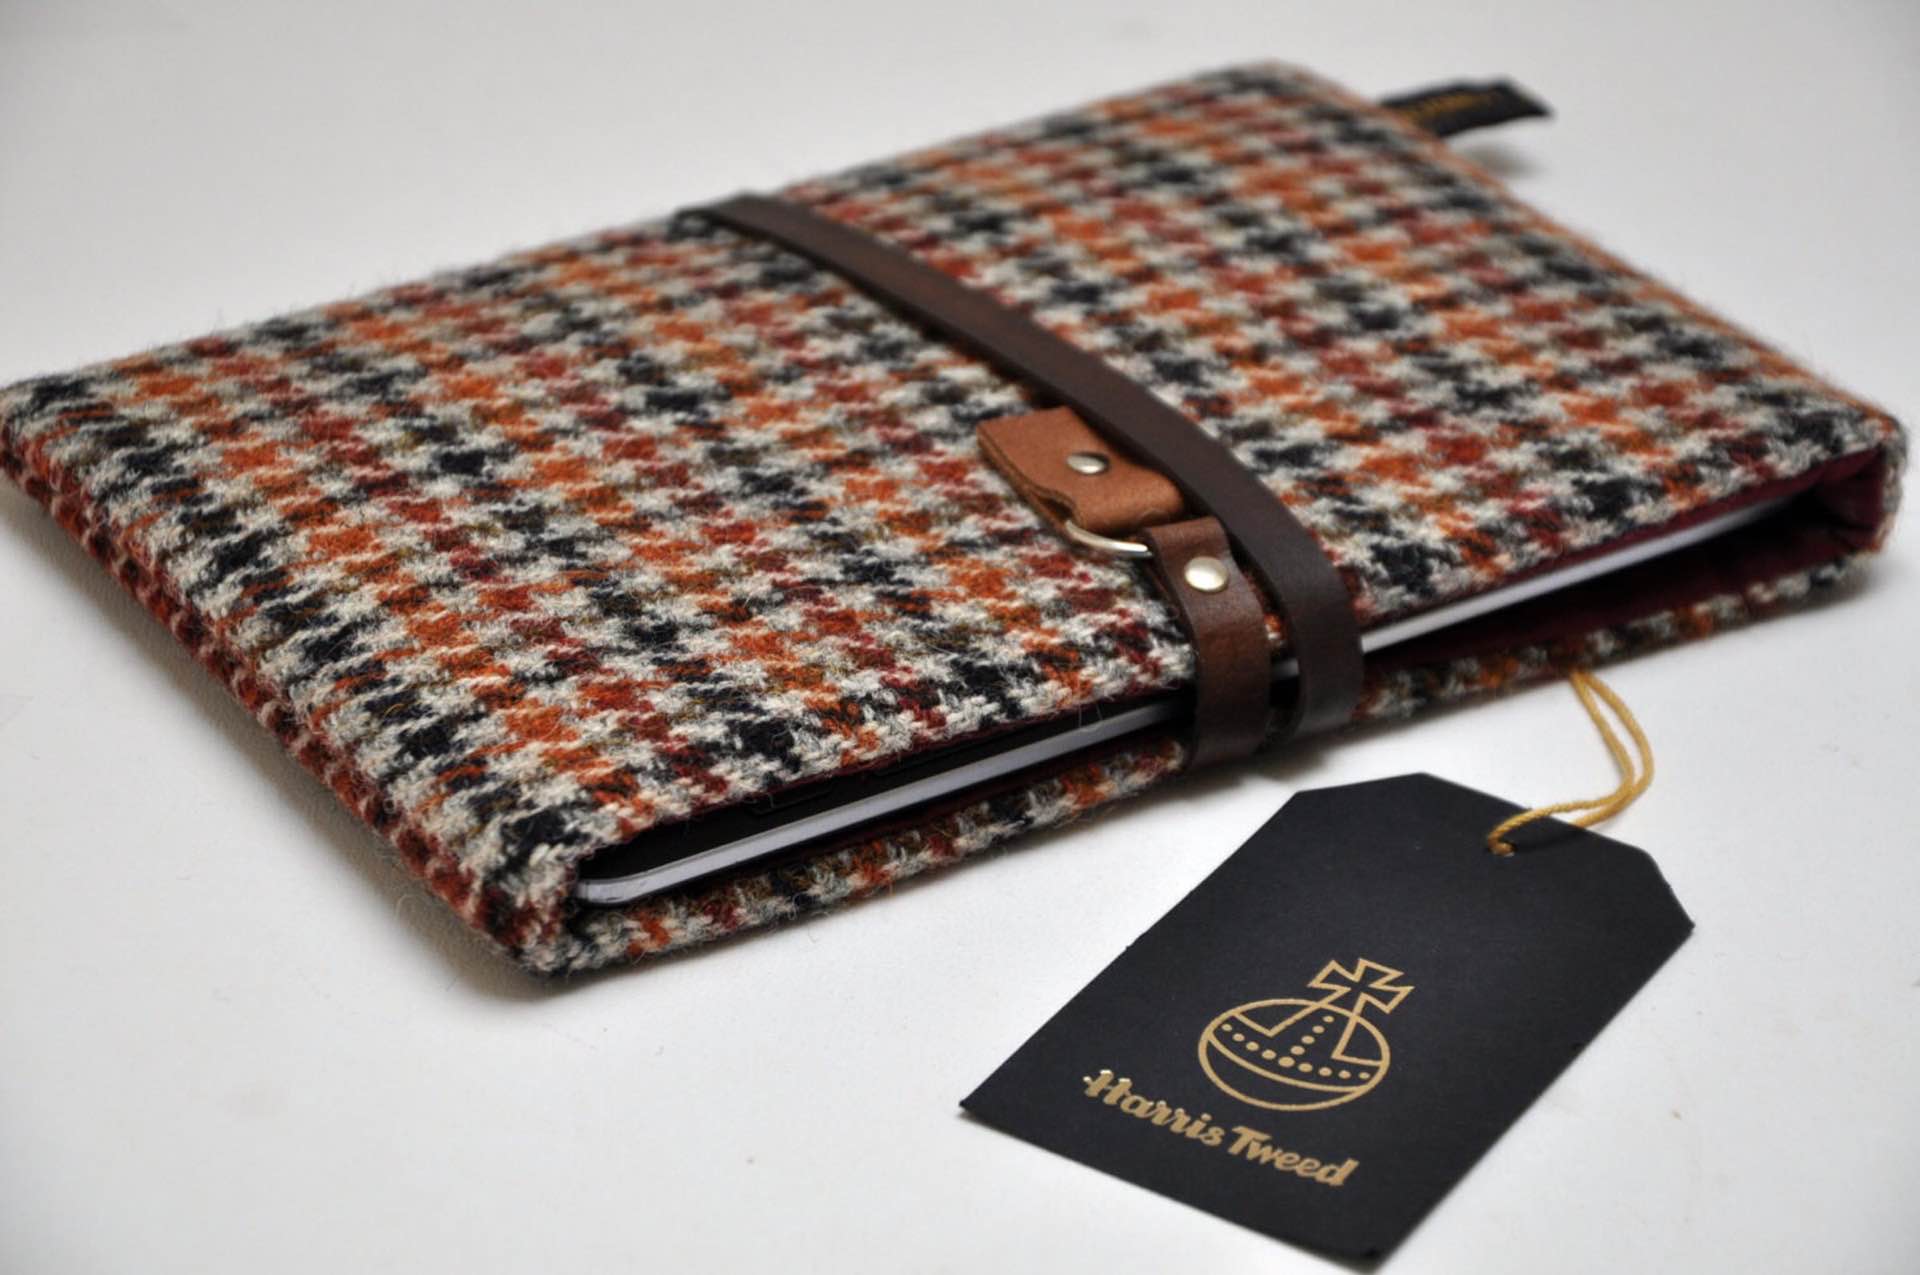 esplanade-london-handcrafted-harris-tweed-cases-sleeves-wallets-and-more